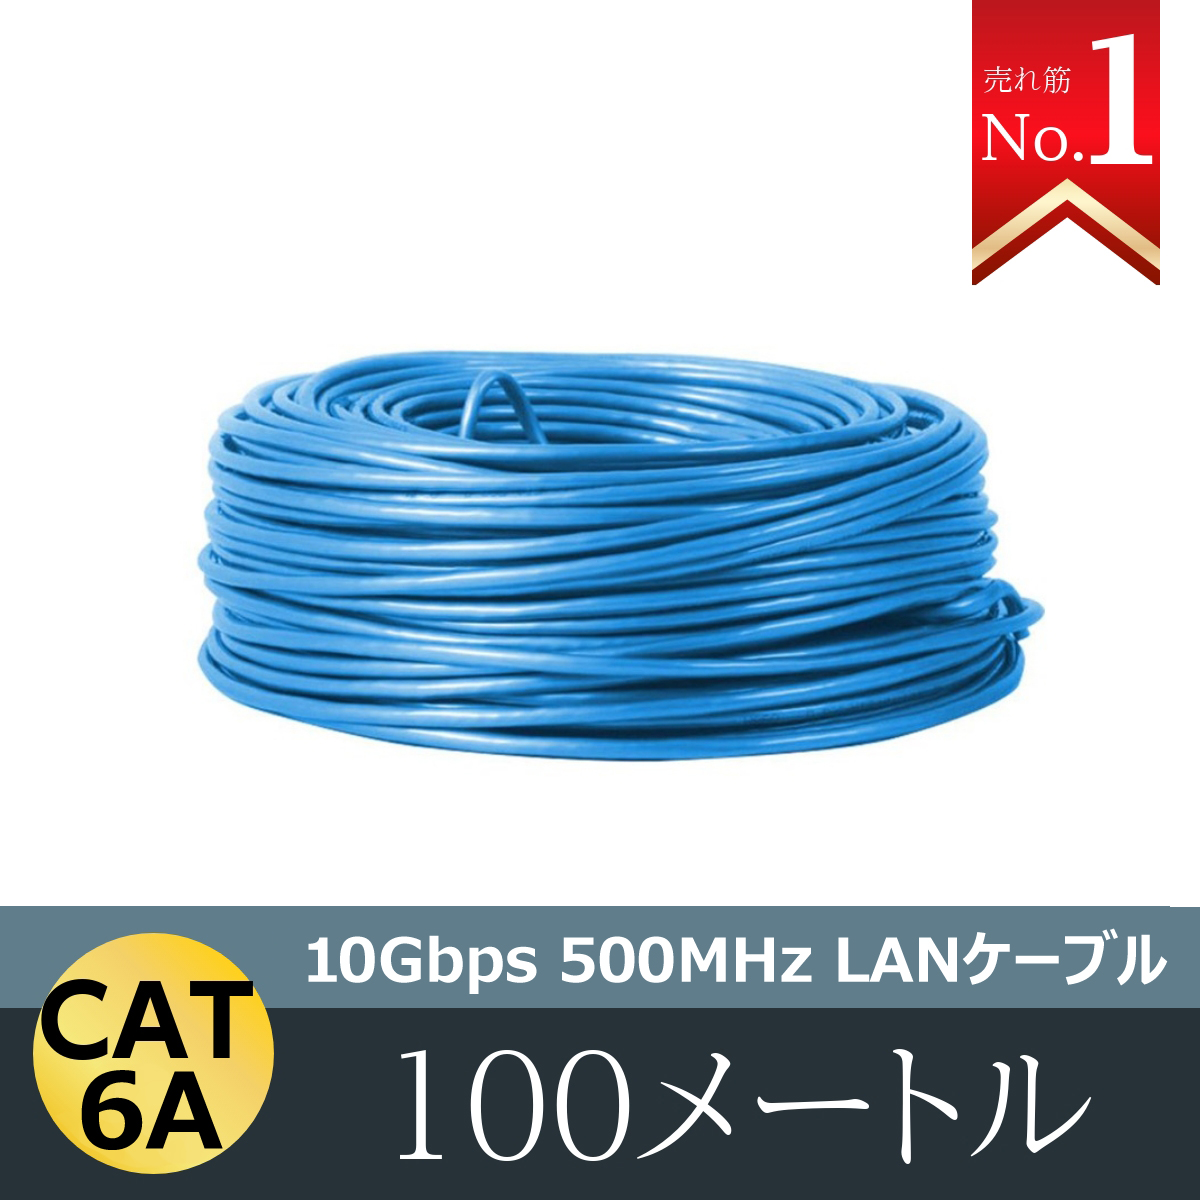 CAT 6A LANケーブル100m 100メートル 10ギガビット 10Gbps 500MHz 光